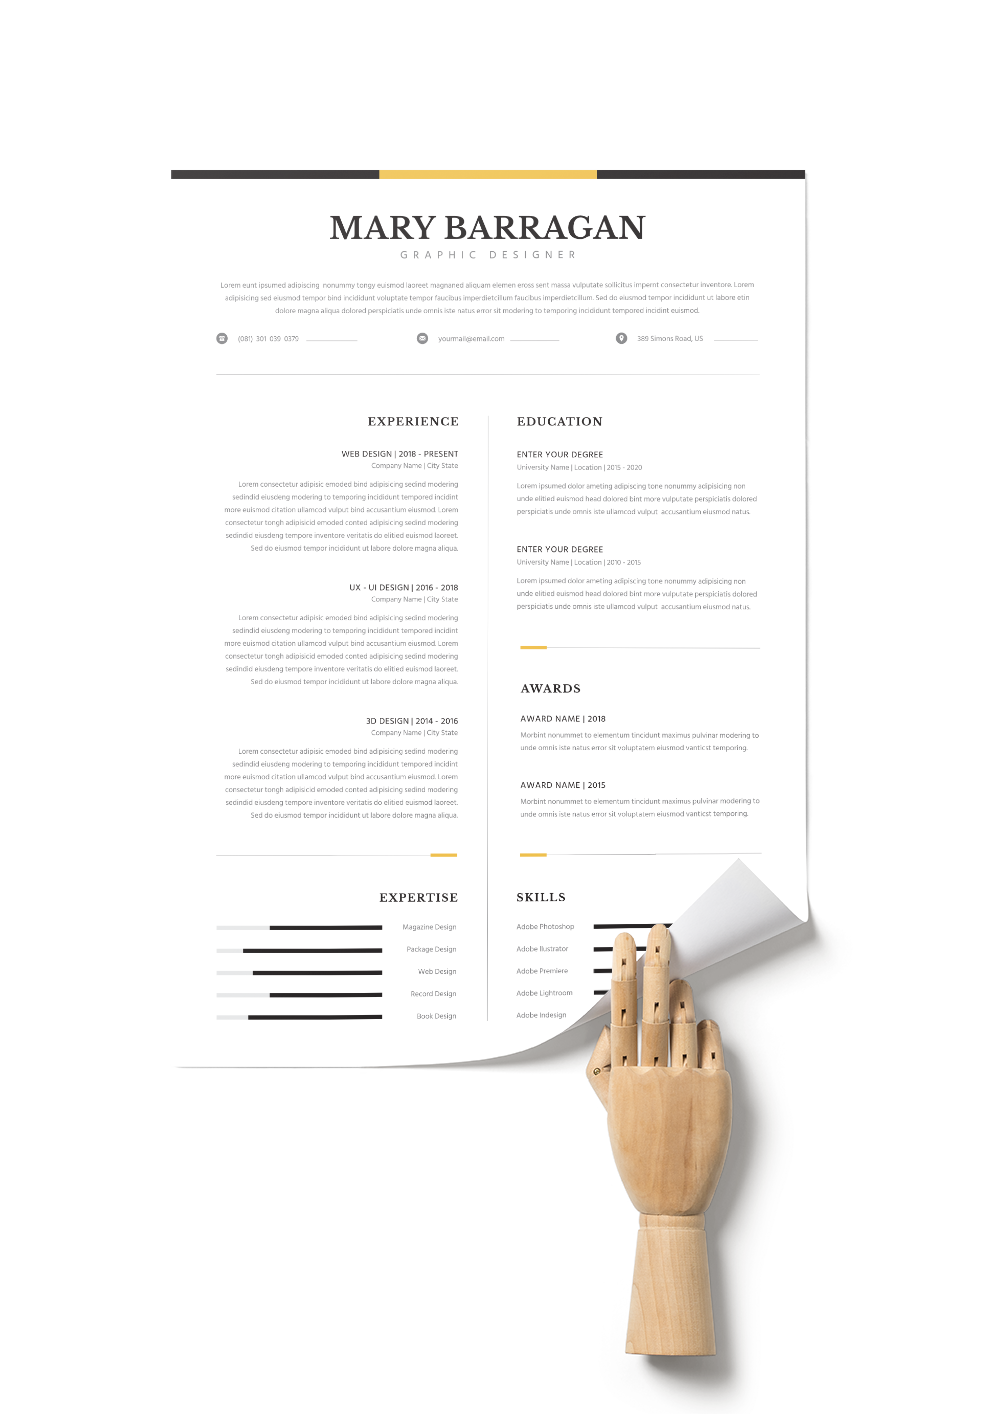 CV #88 Mary Barragan